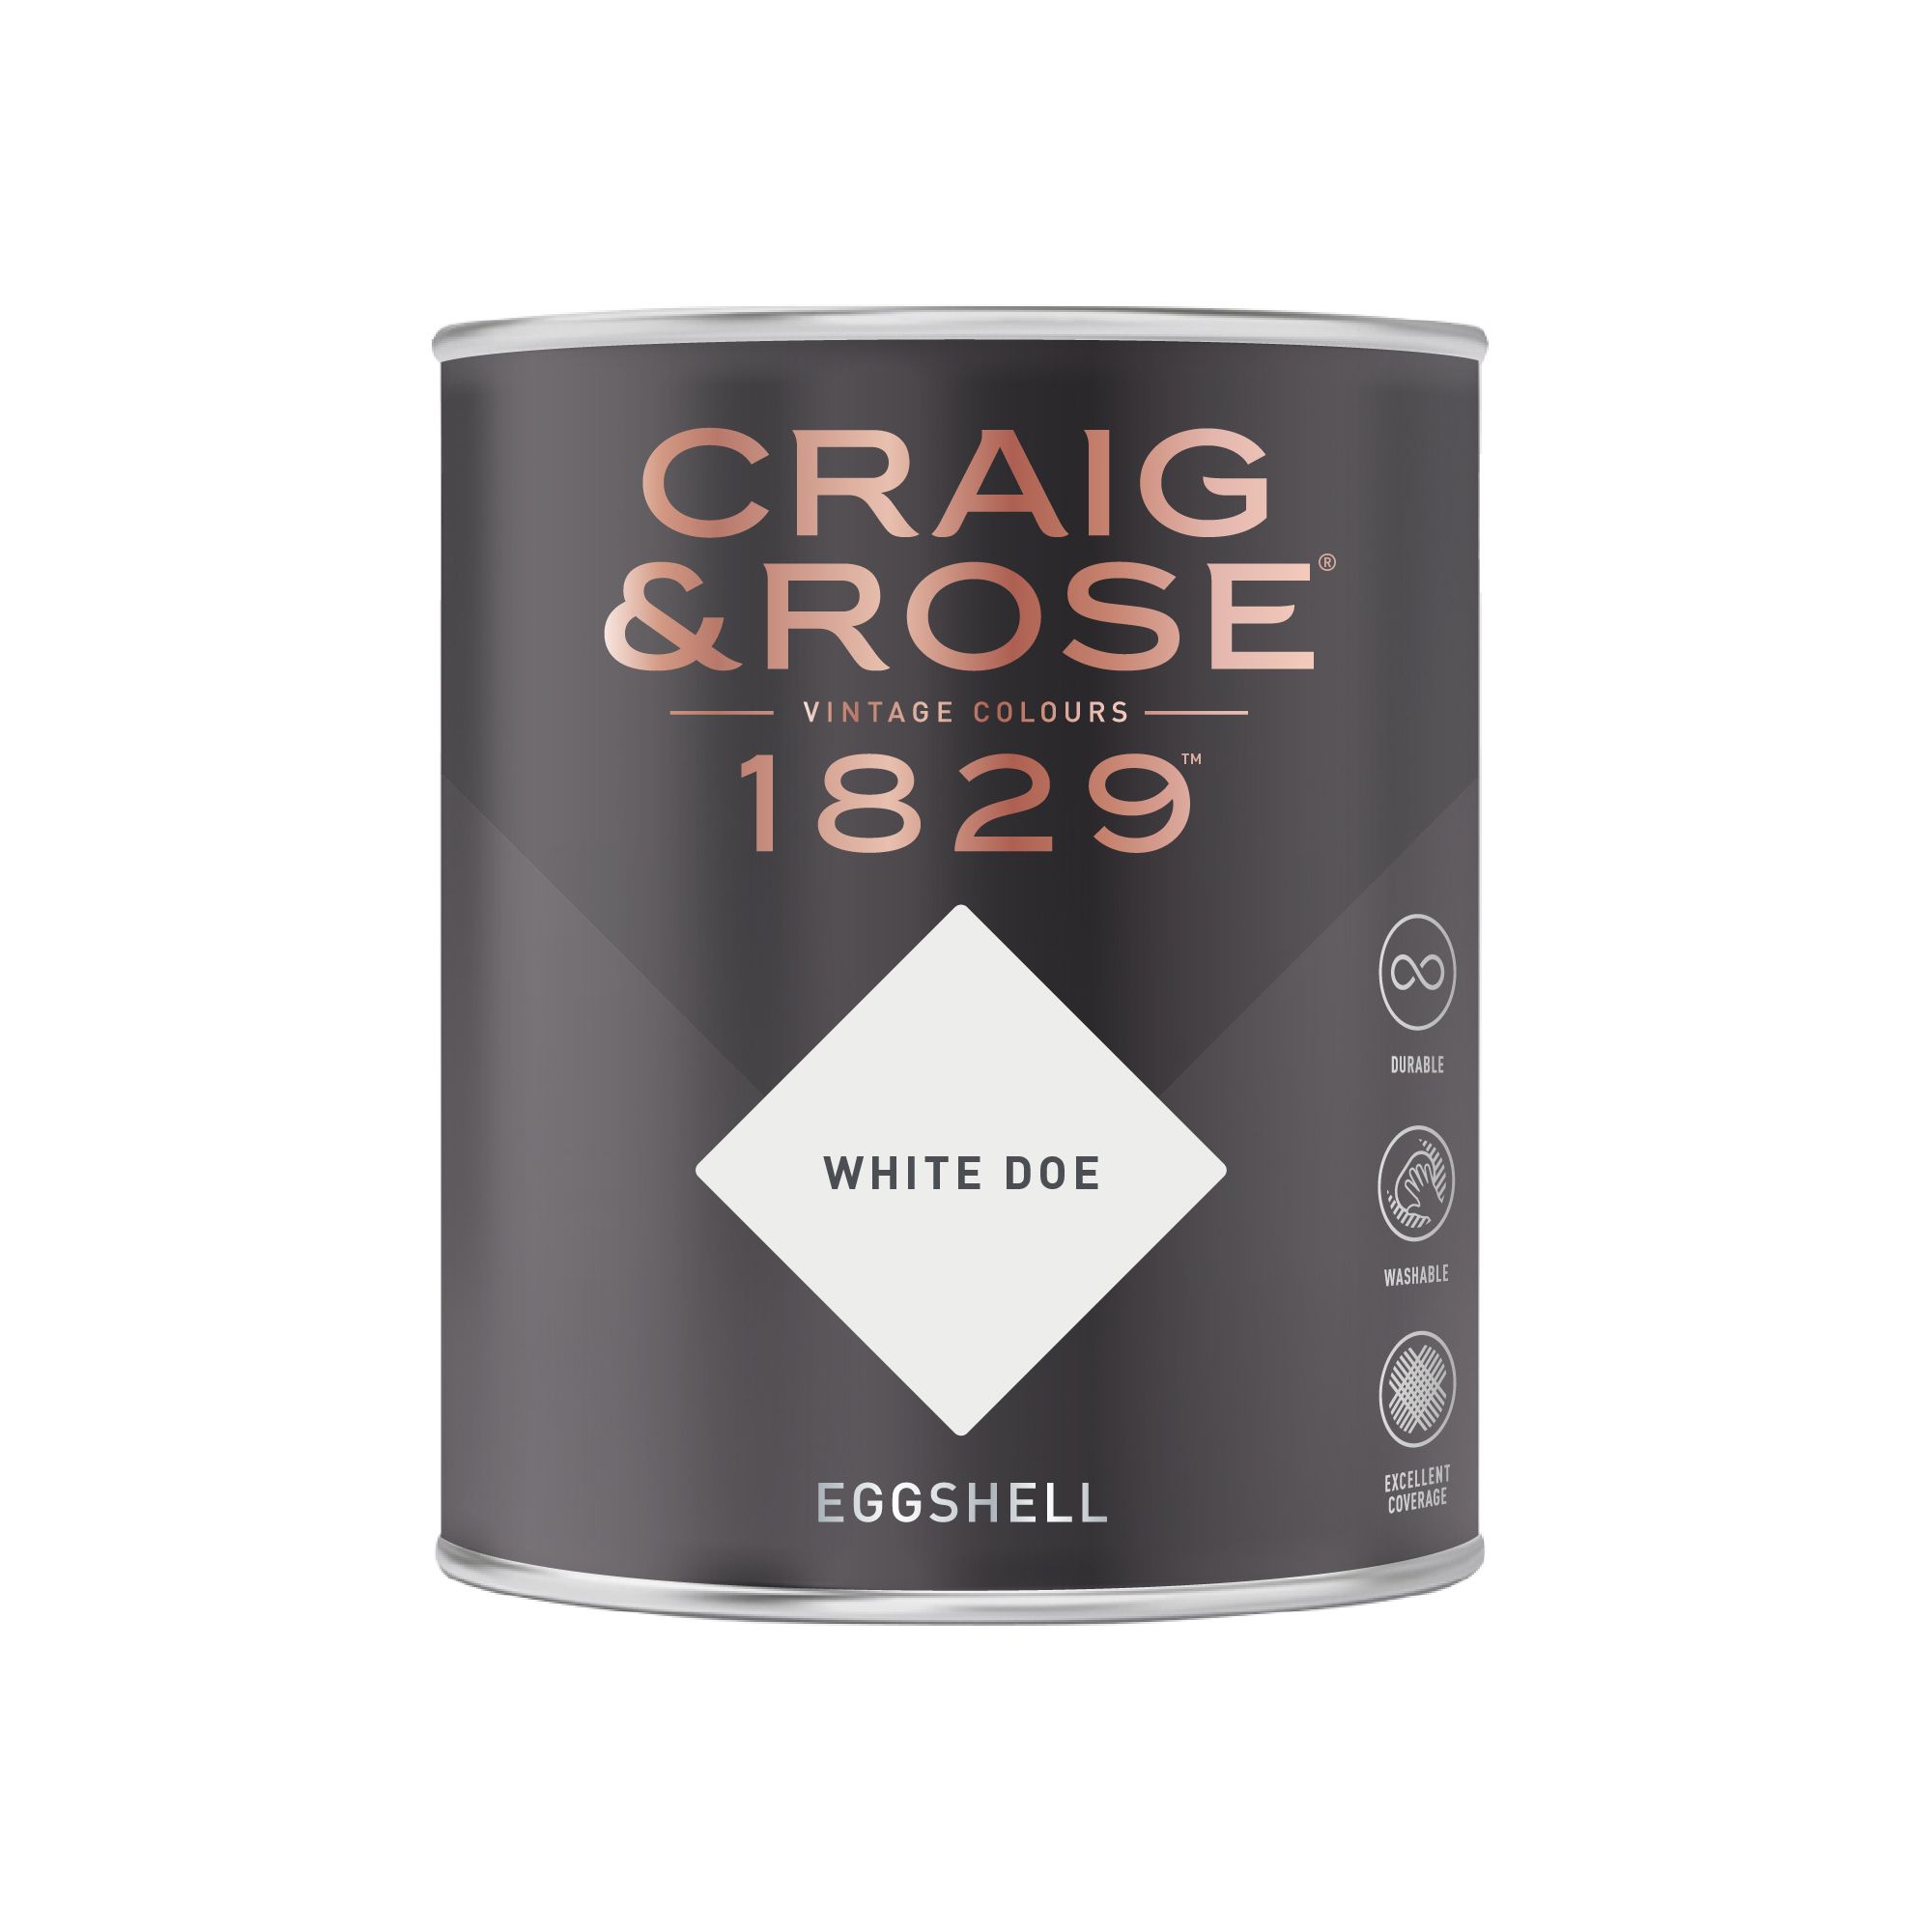 Craig & Rose 1829 White Doe Eggshell Wall paint, 750ml